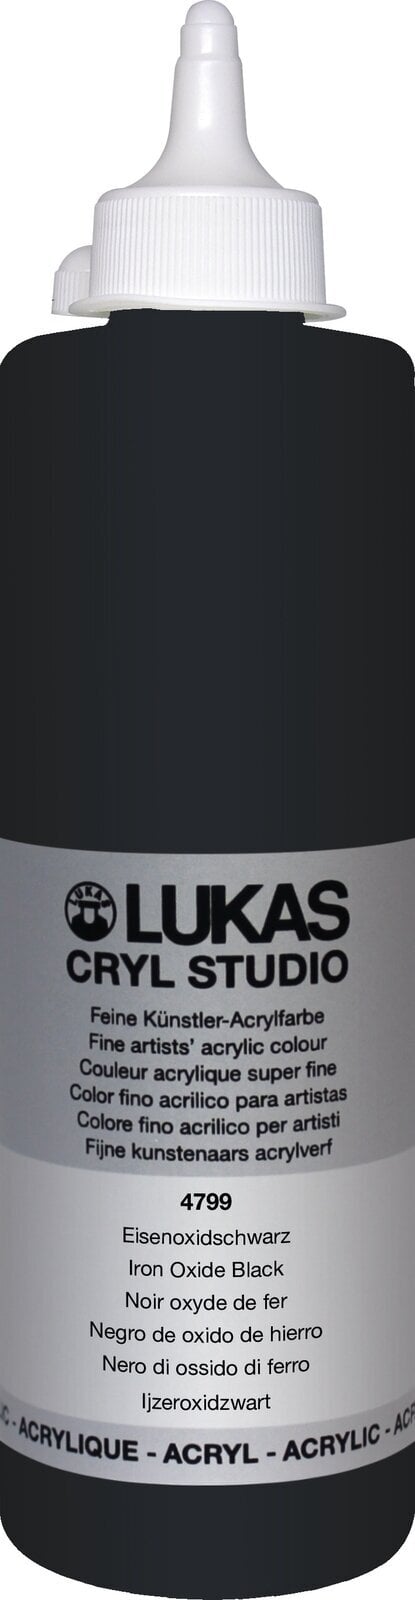 Acrylfarbe Lukas Cryl Studio Acrylfarbe 500 ml Iron Oxid Black